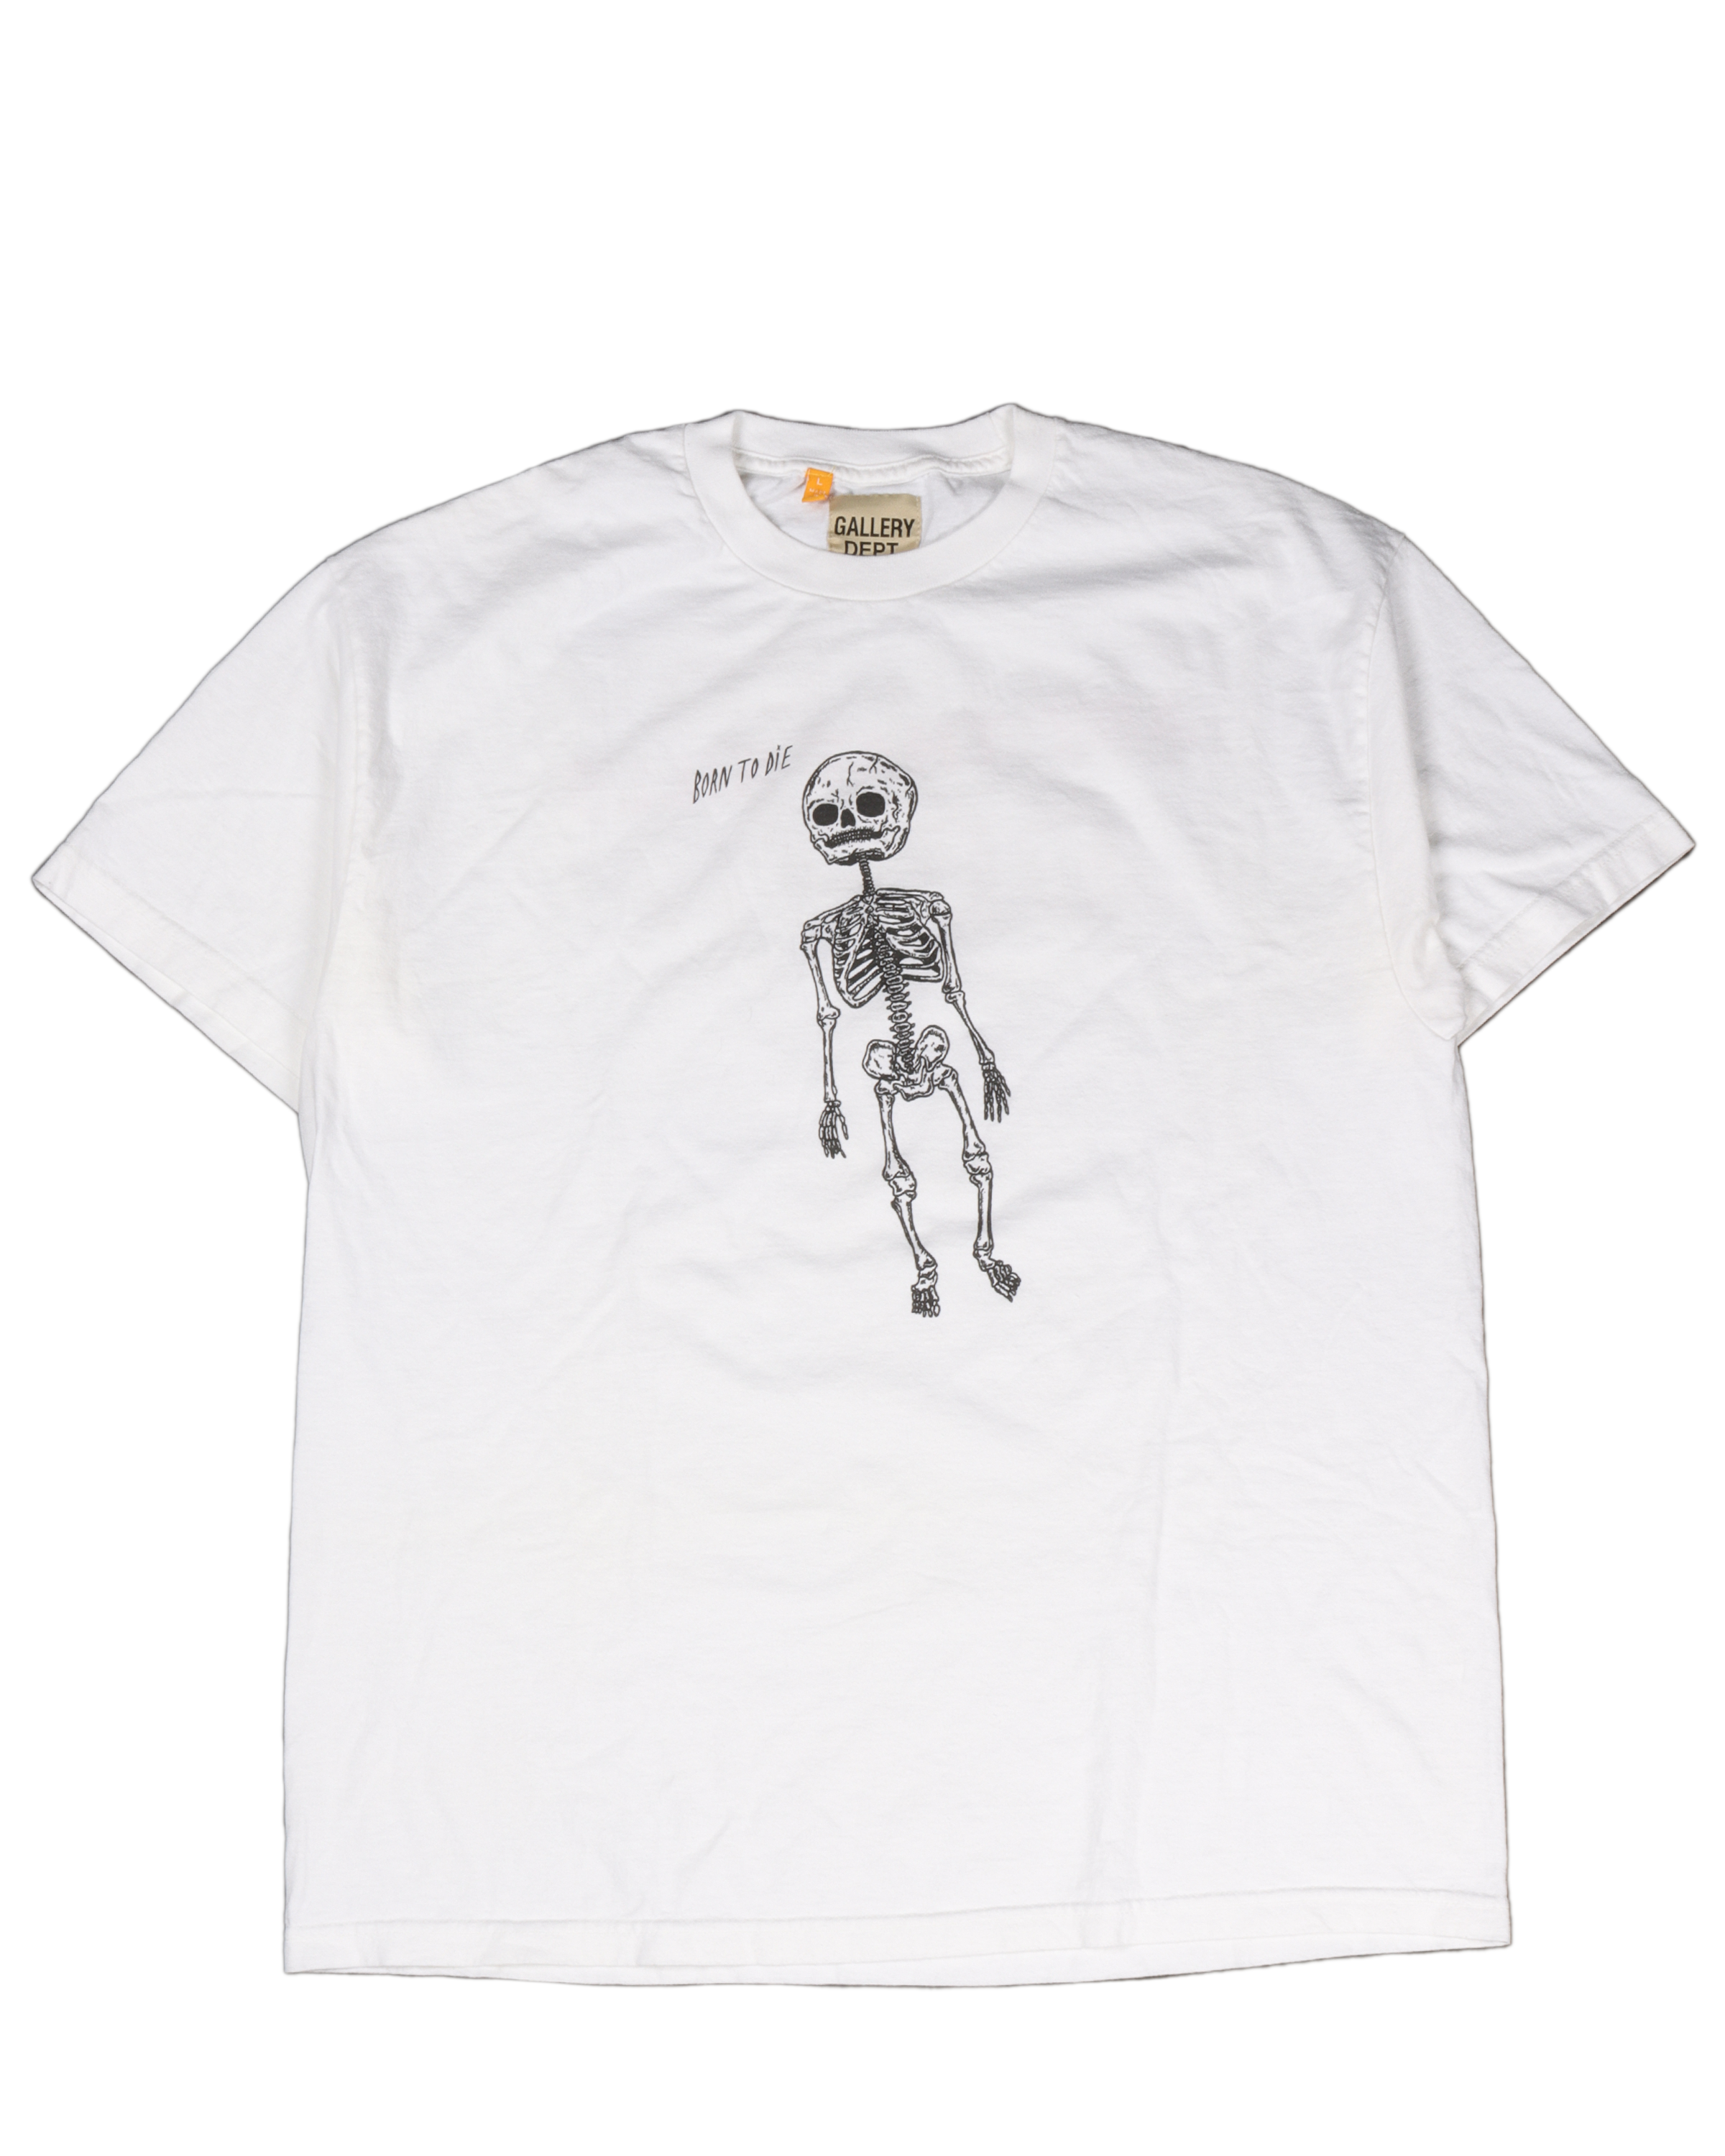 "Born To Die" T-Shirt